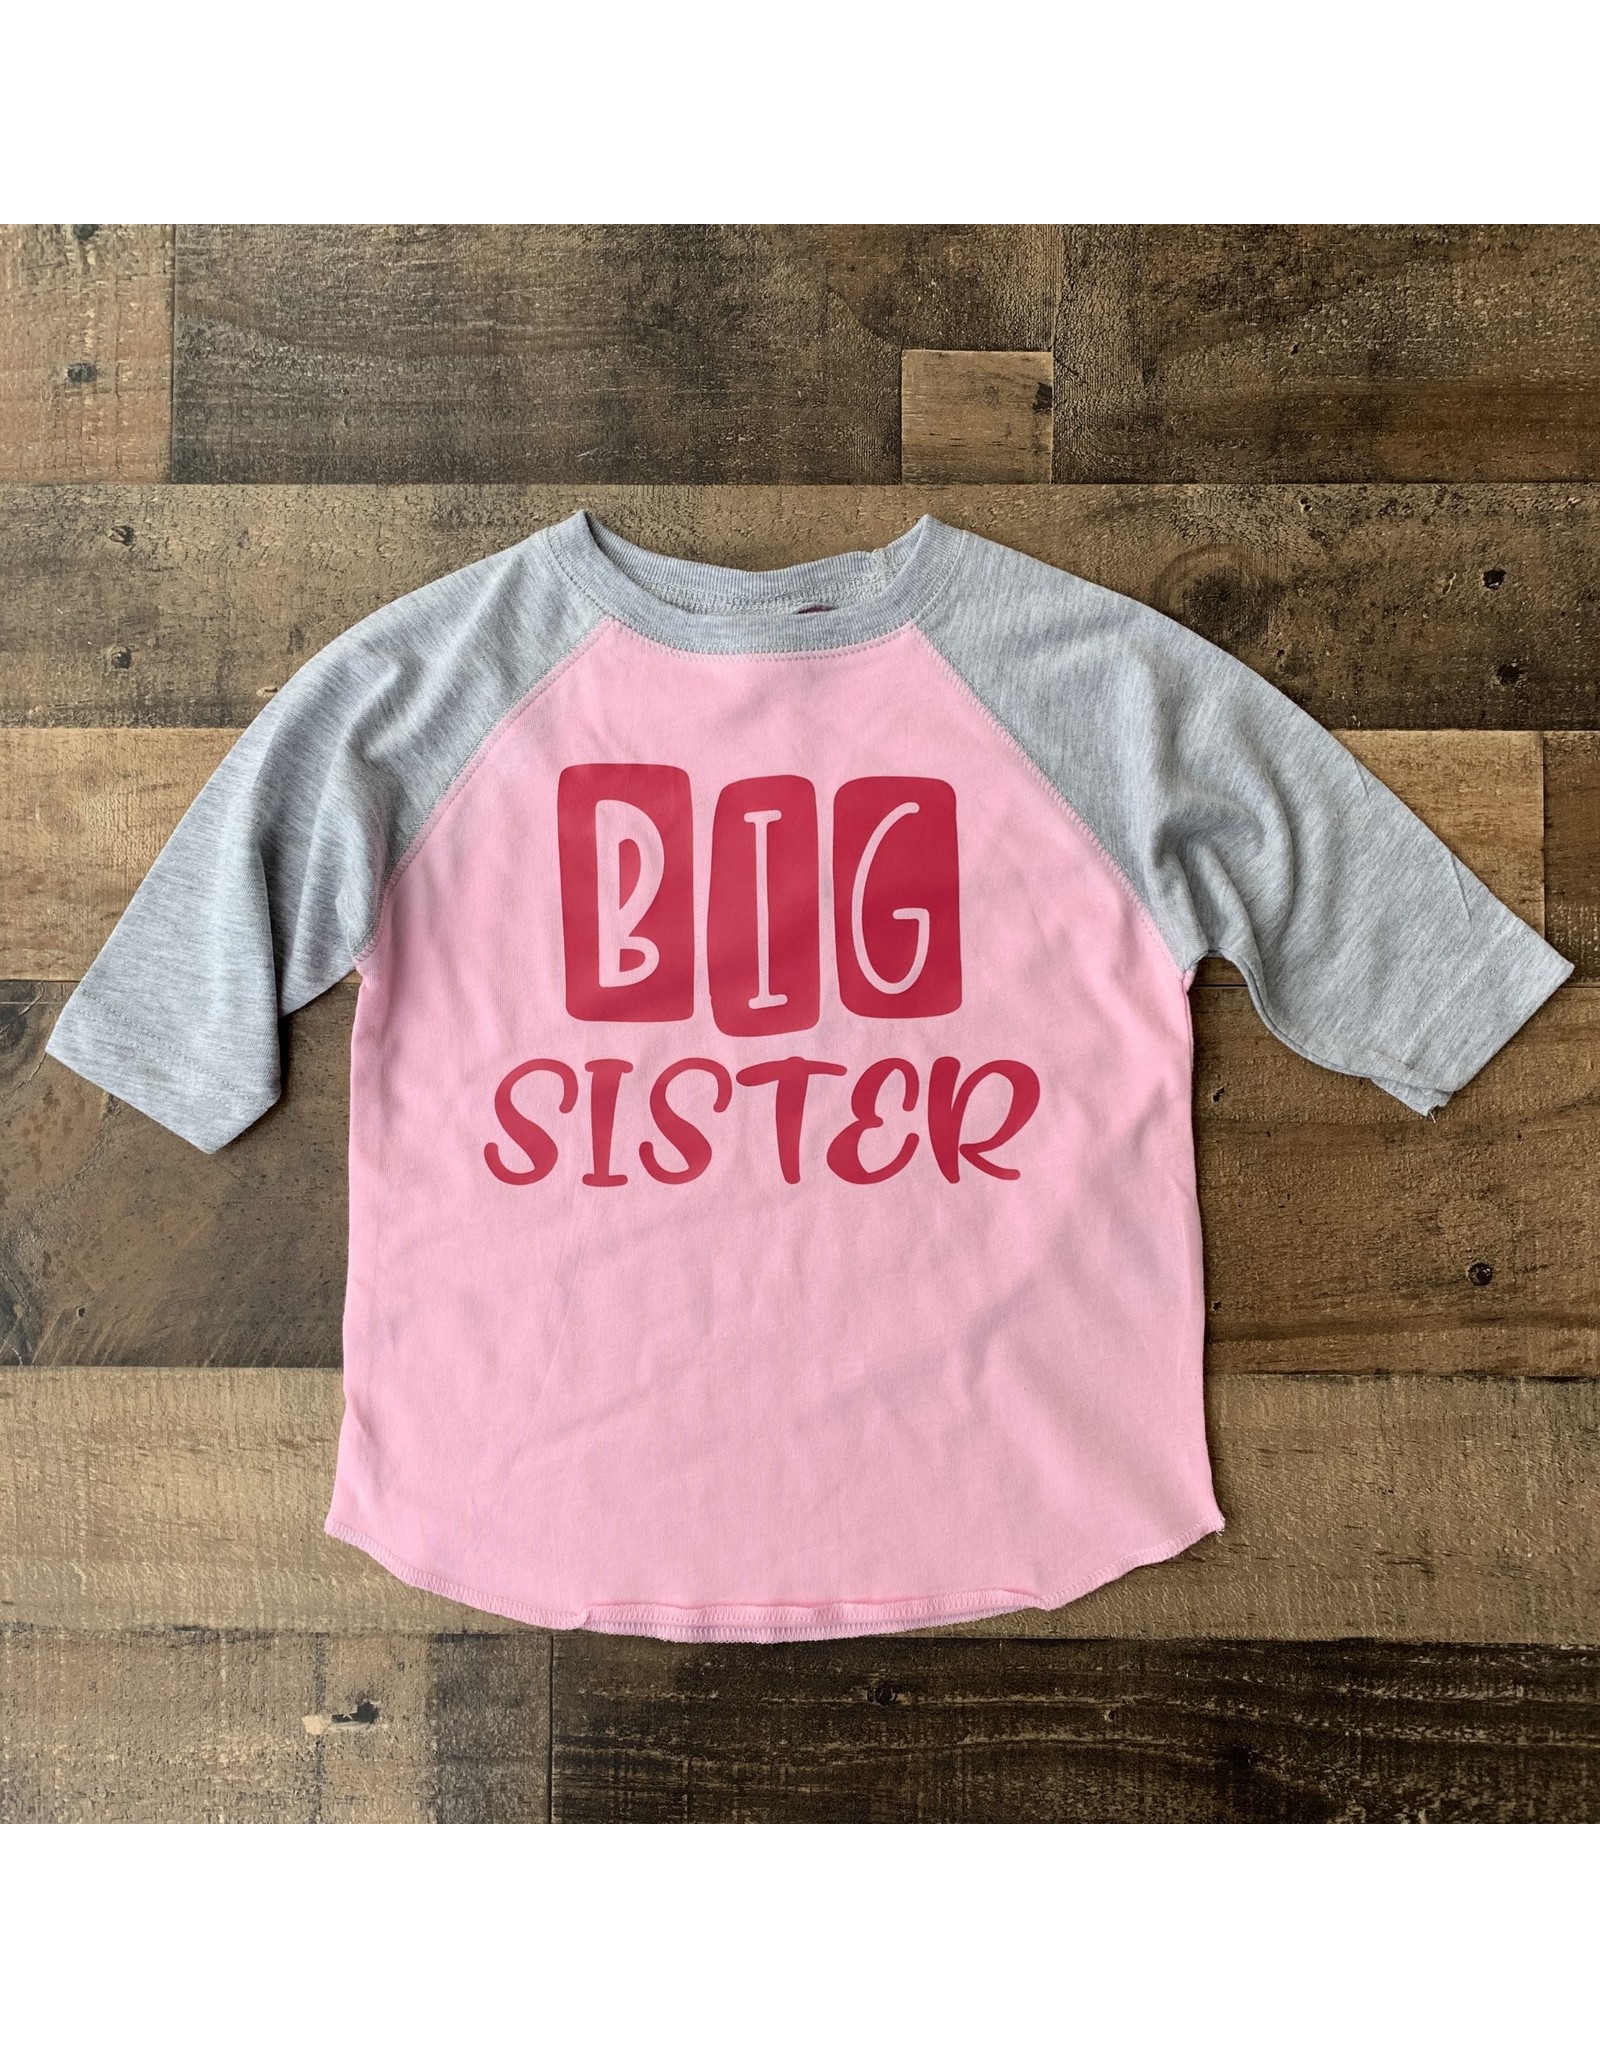 BIG SISTER Grey/Pink Raglan